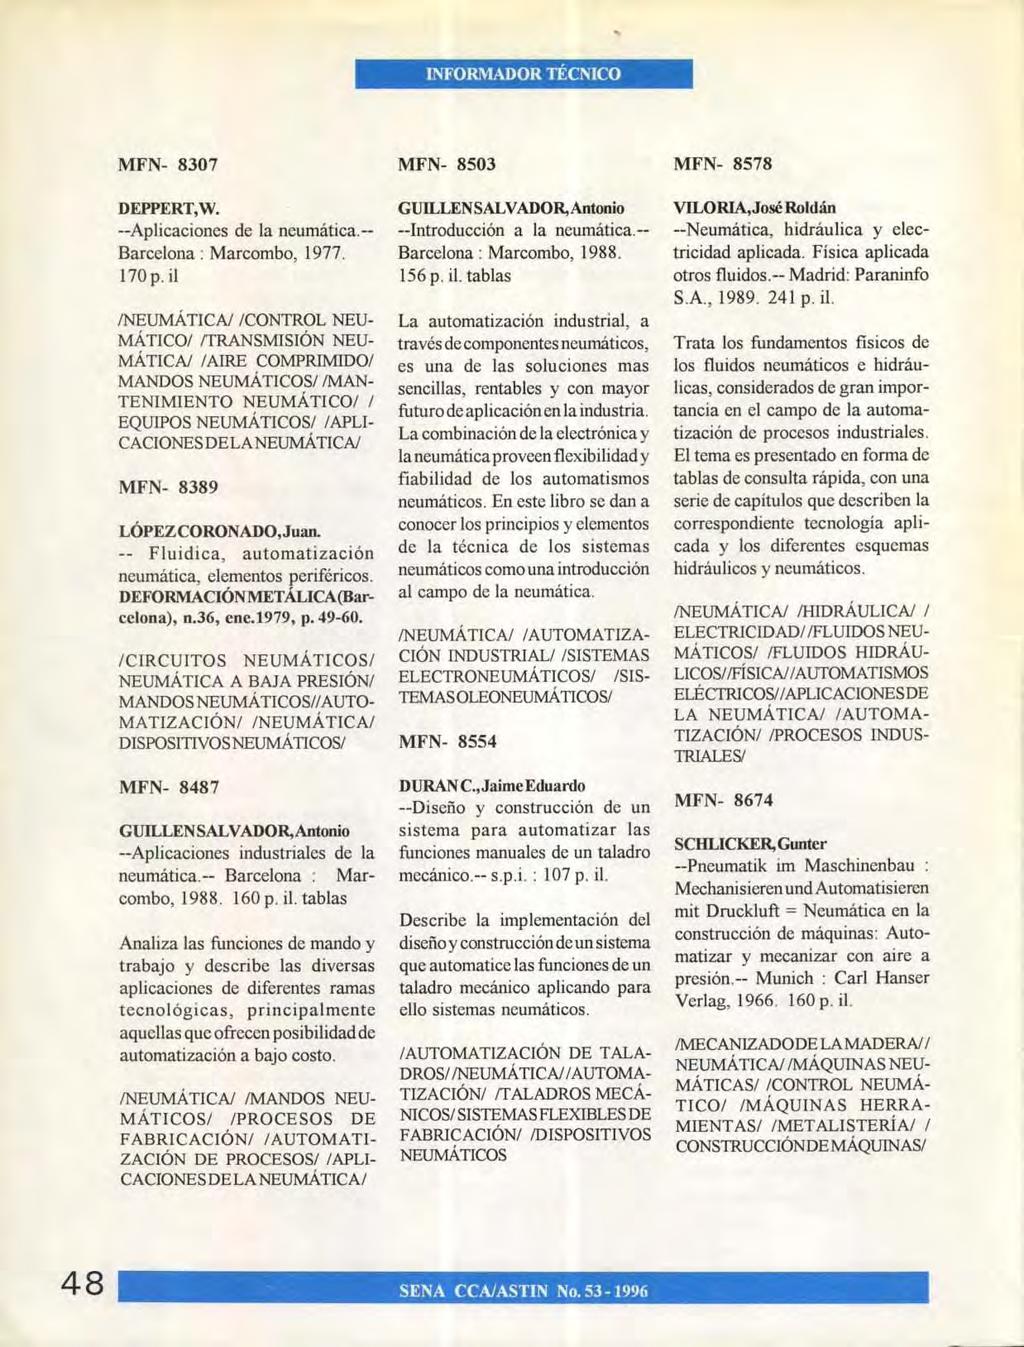 INFORMADOR TE.cmco MFN- 8307 DEPPERT,W. --Aplicaciones de la neumatica.-- Barcelona : Marcombo, 1977. 170 p.